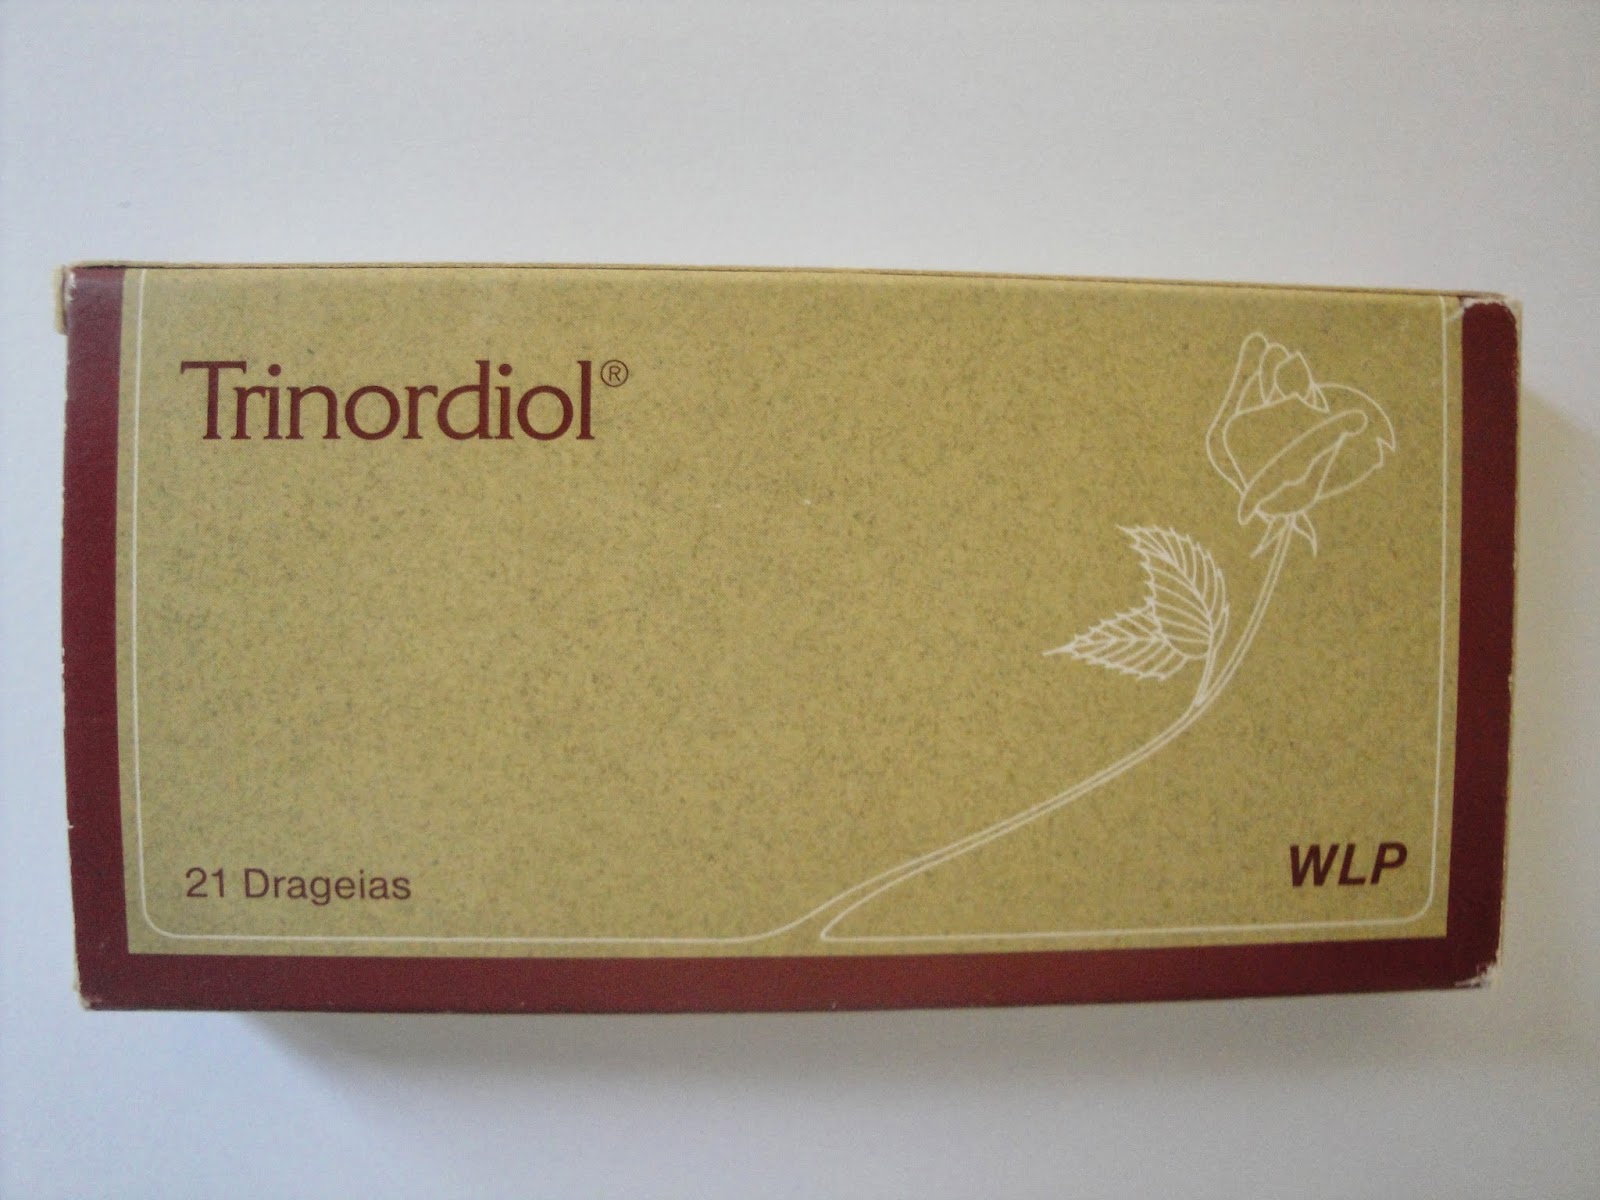 Caixa de trinordiol